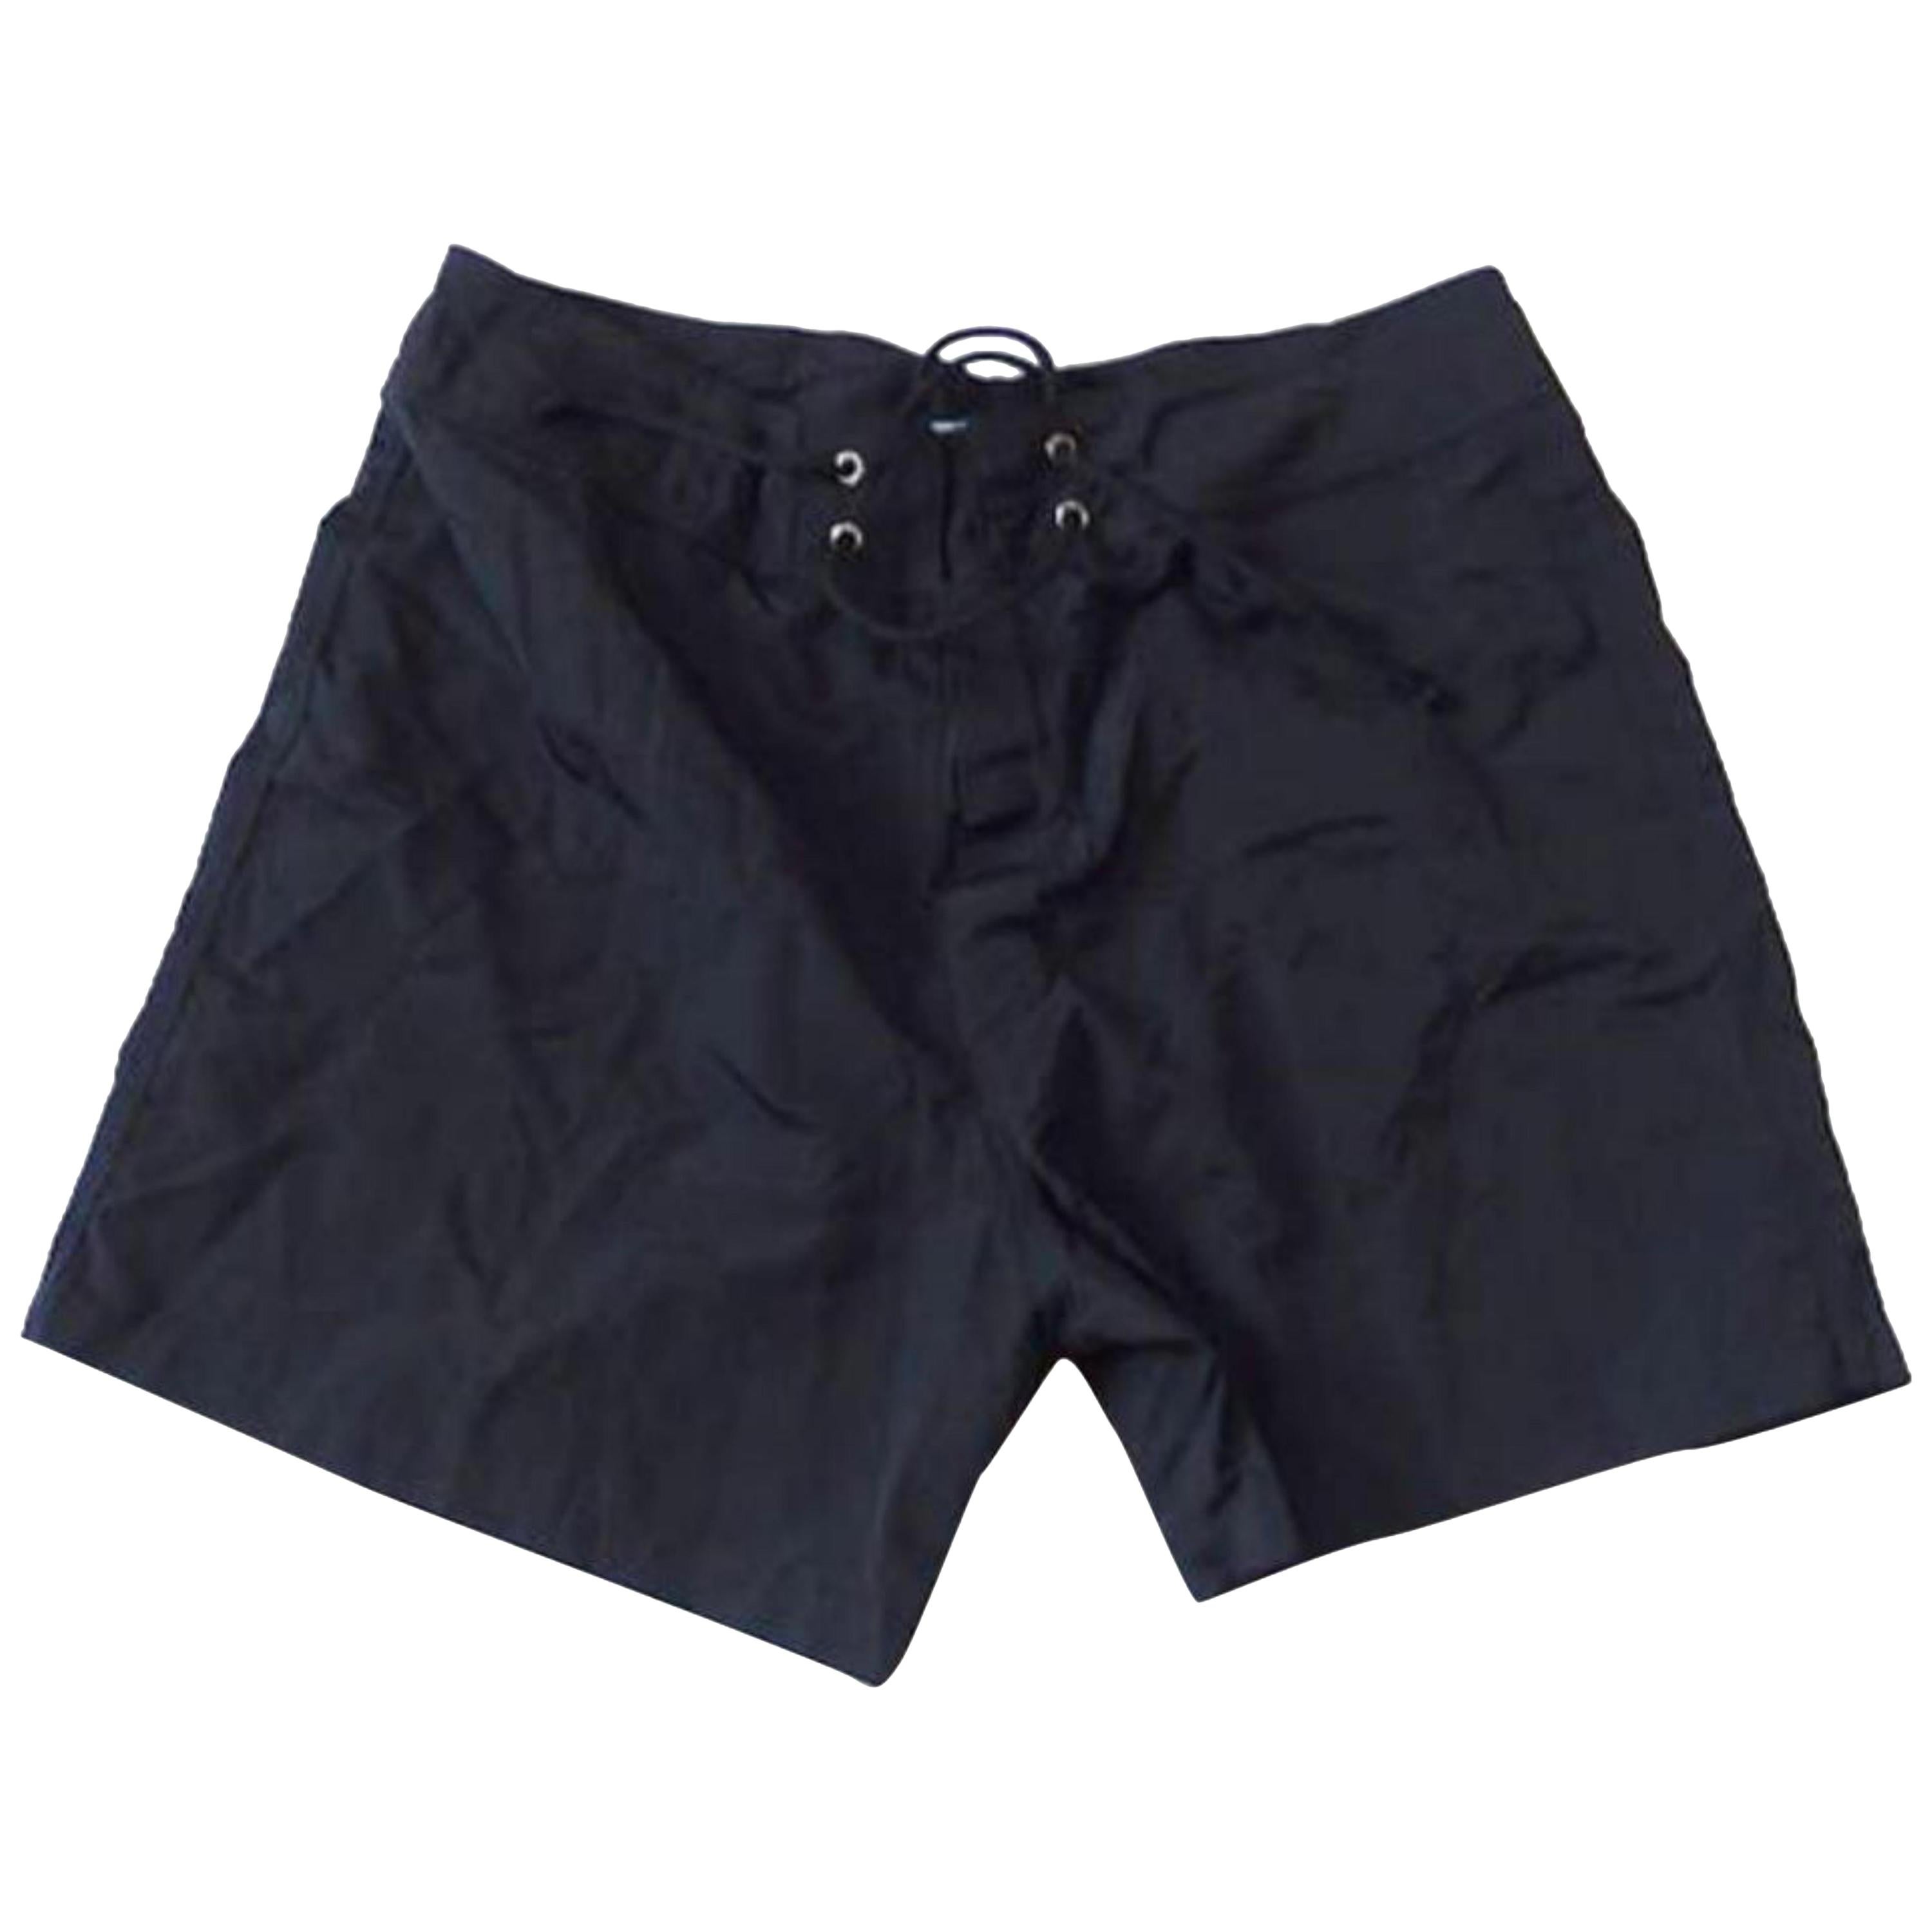 Gucci Black Gg Trunks Bathing Suit 226373 Shorts im Angebot